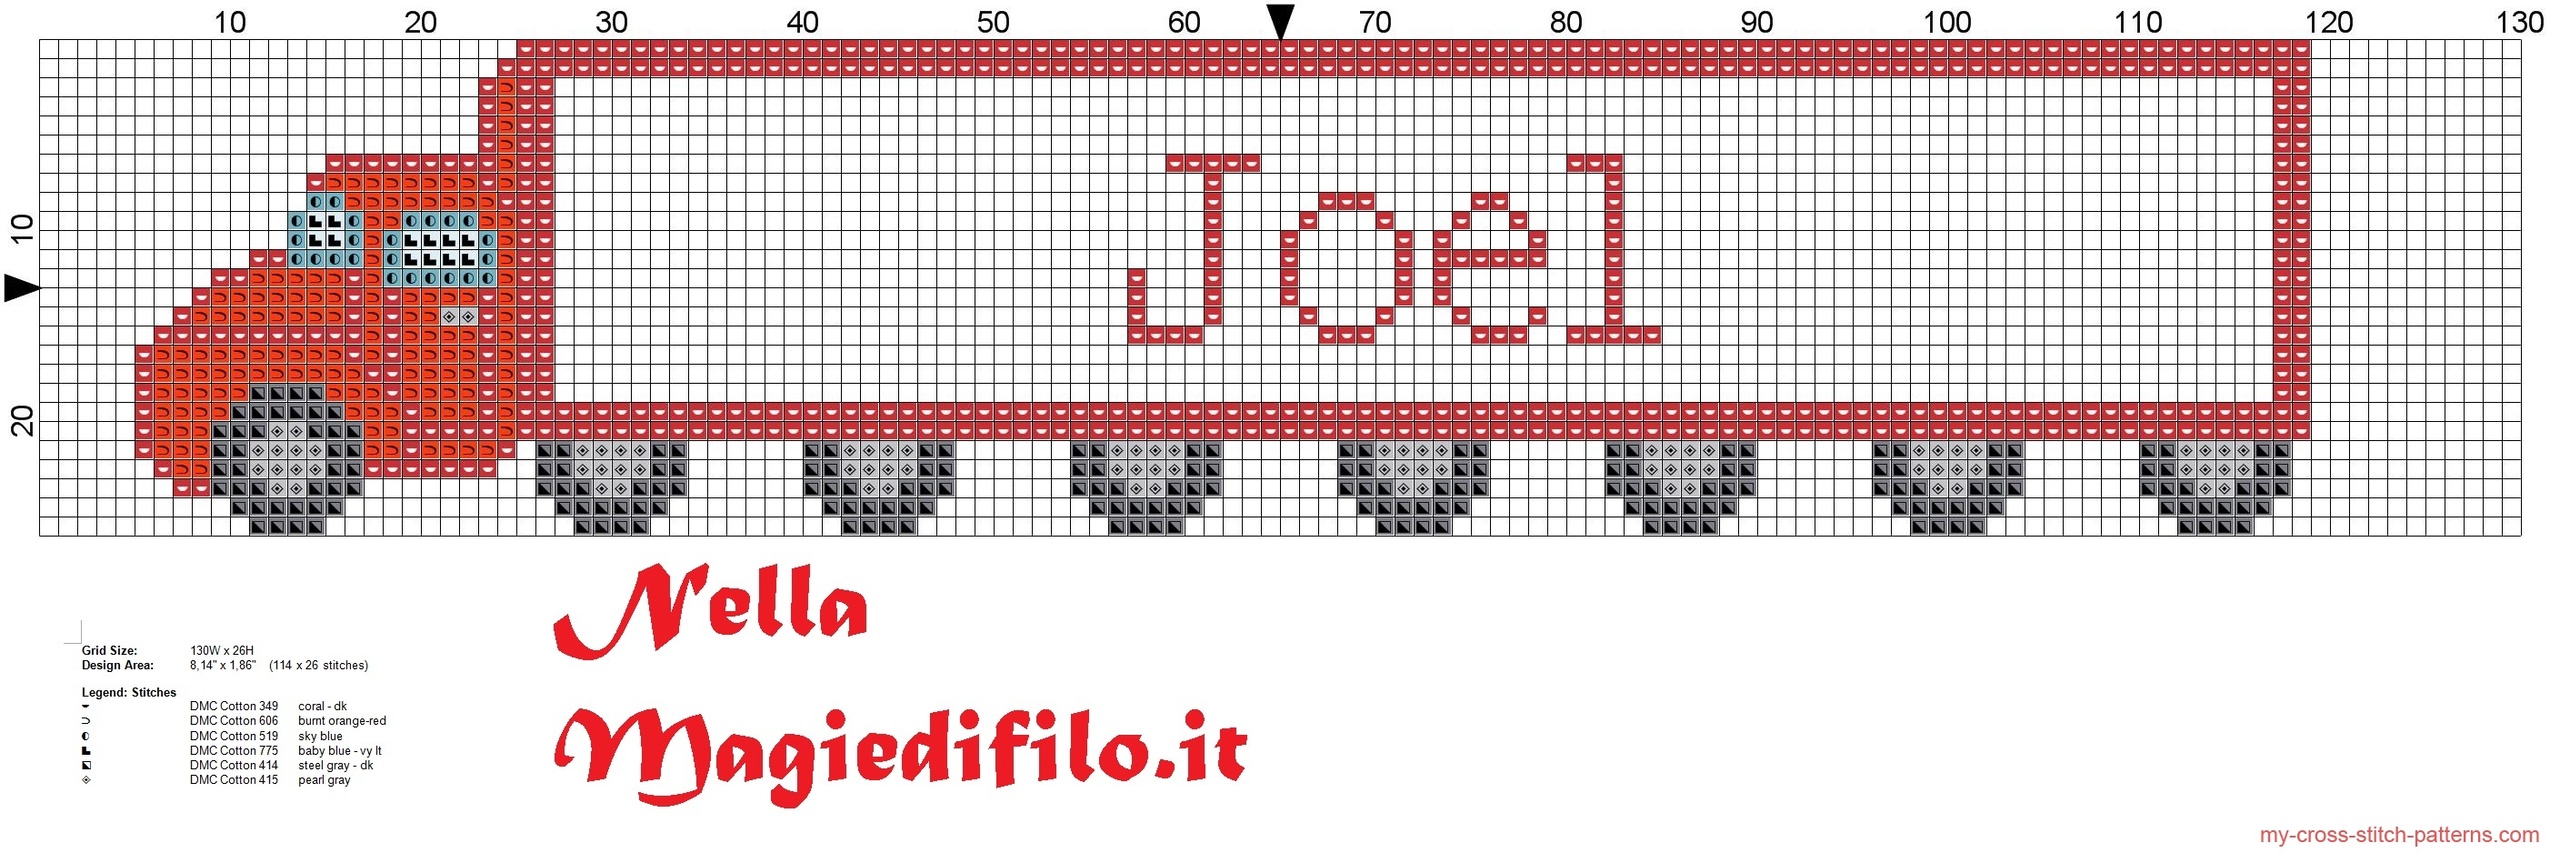 name_joel_with_truck_cross_stitch_pattern_